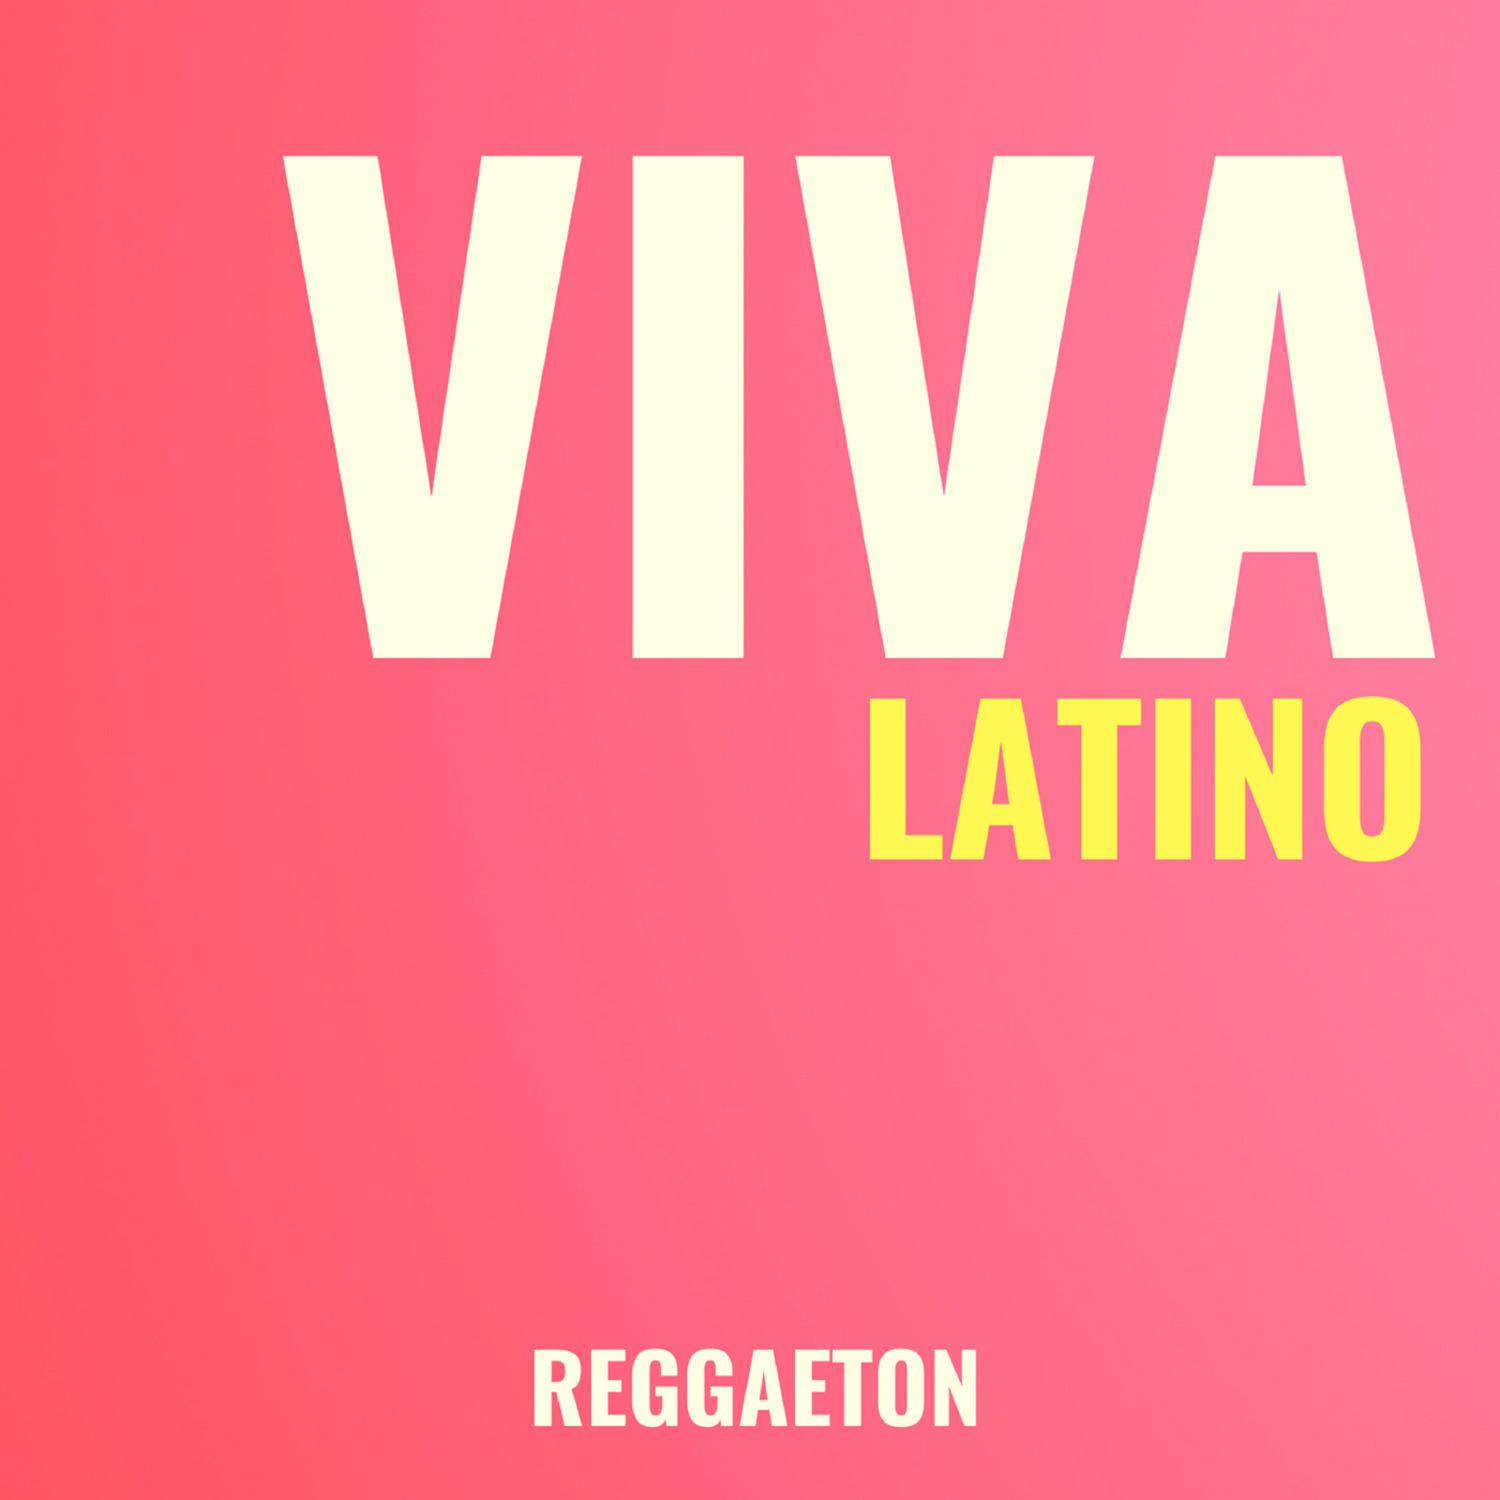 Viva Latino Reggaeton